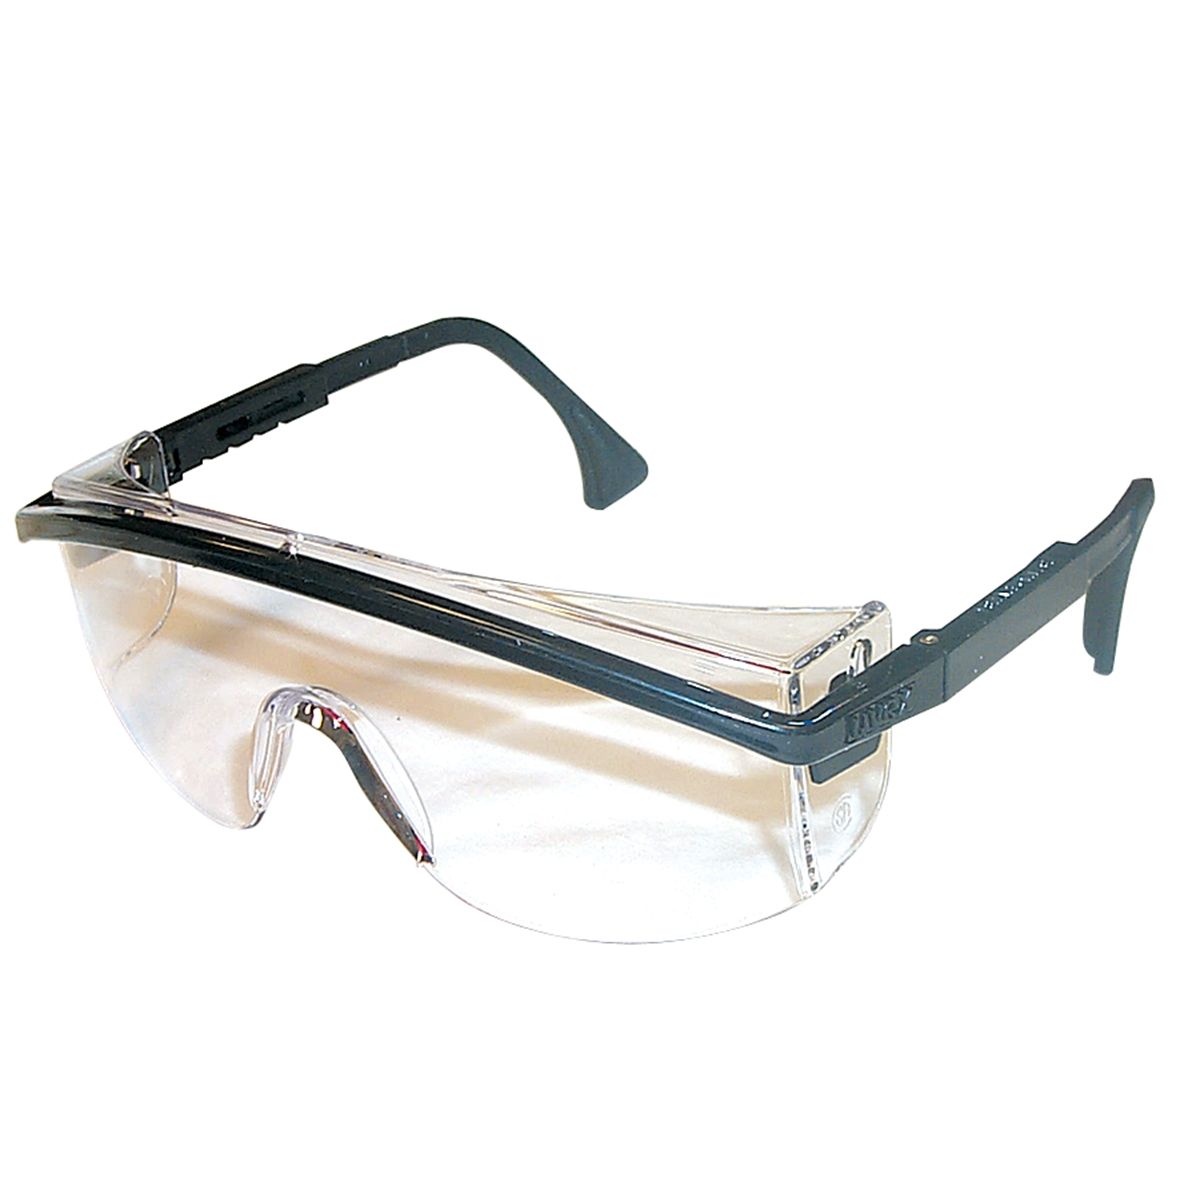 Duoflex Safety Glasses - Astrospec 3000 - Black/Clear Lens